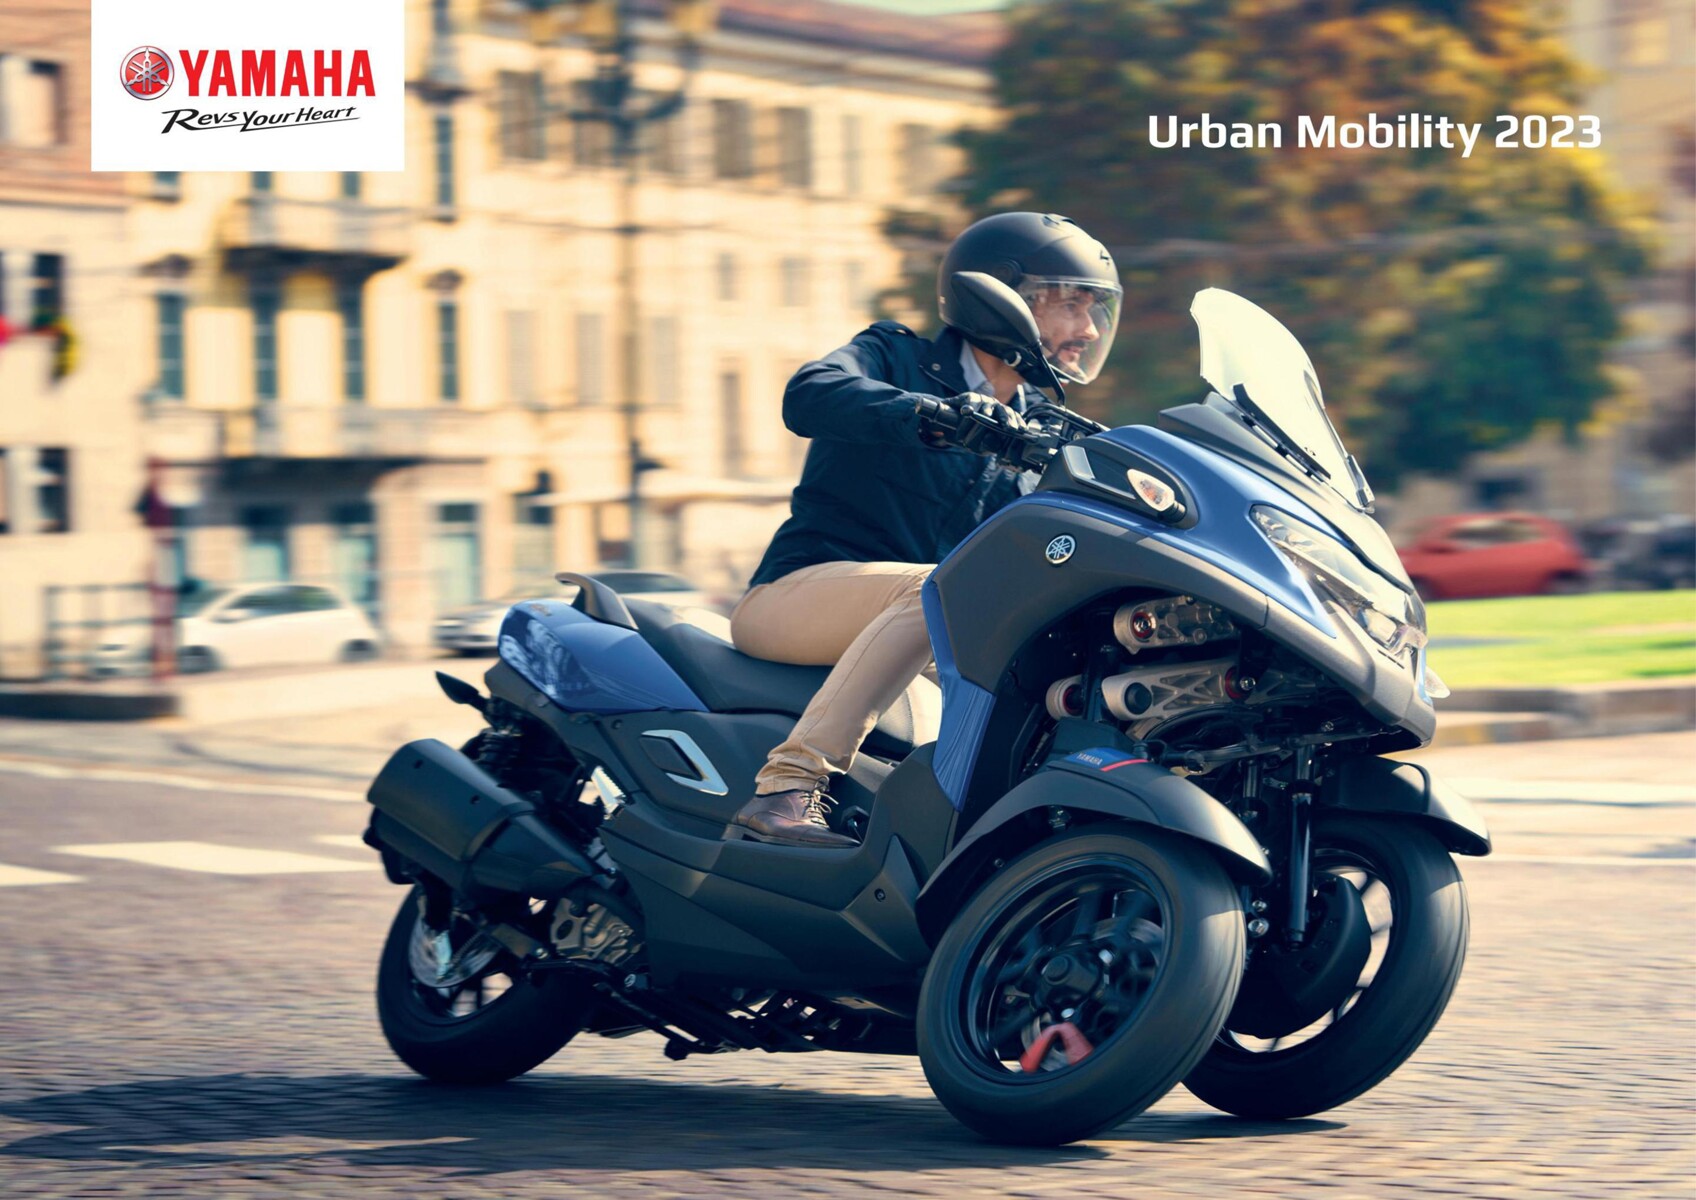 Catalogue Urban mobility 2023 - Yamaha, page 00001